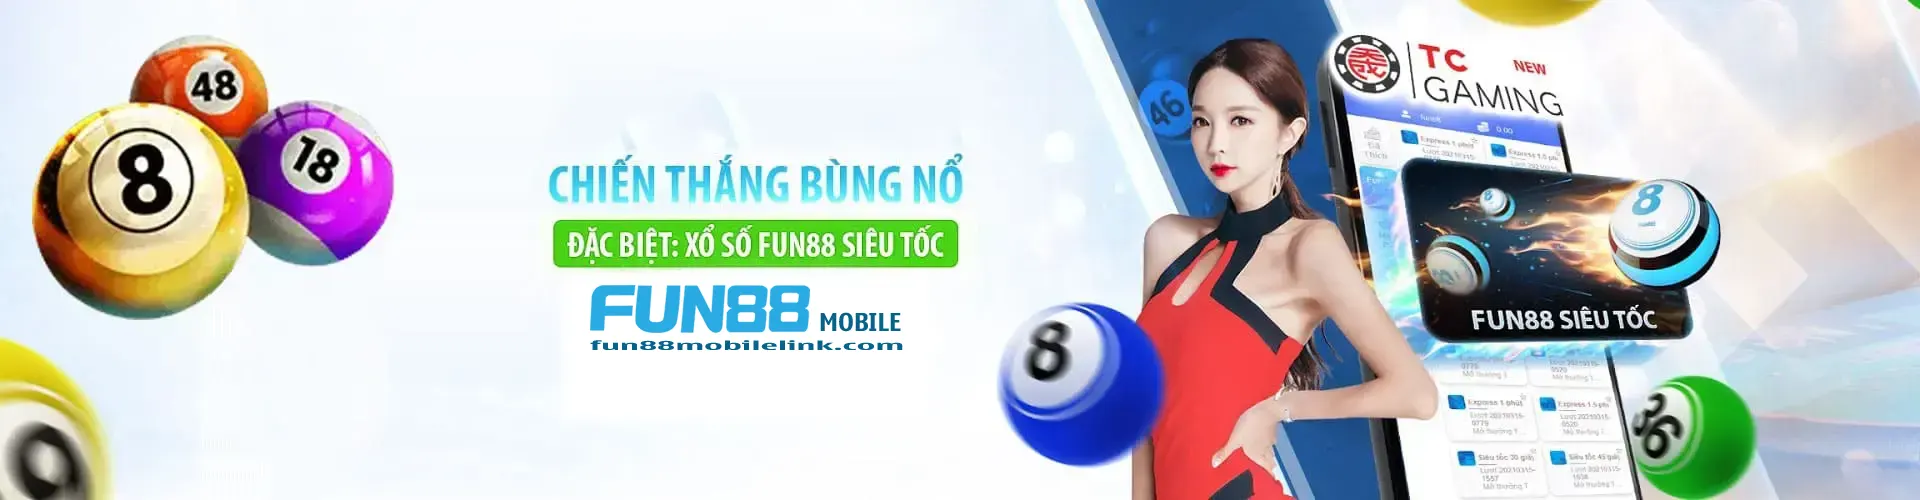 banner fun88 mobile 1